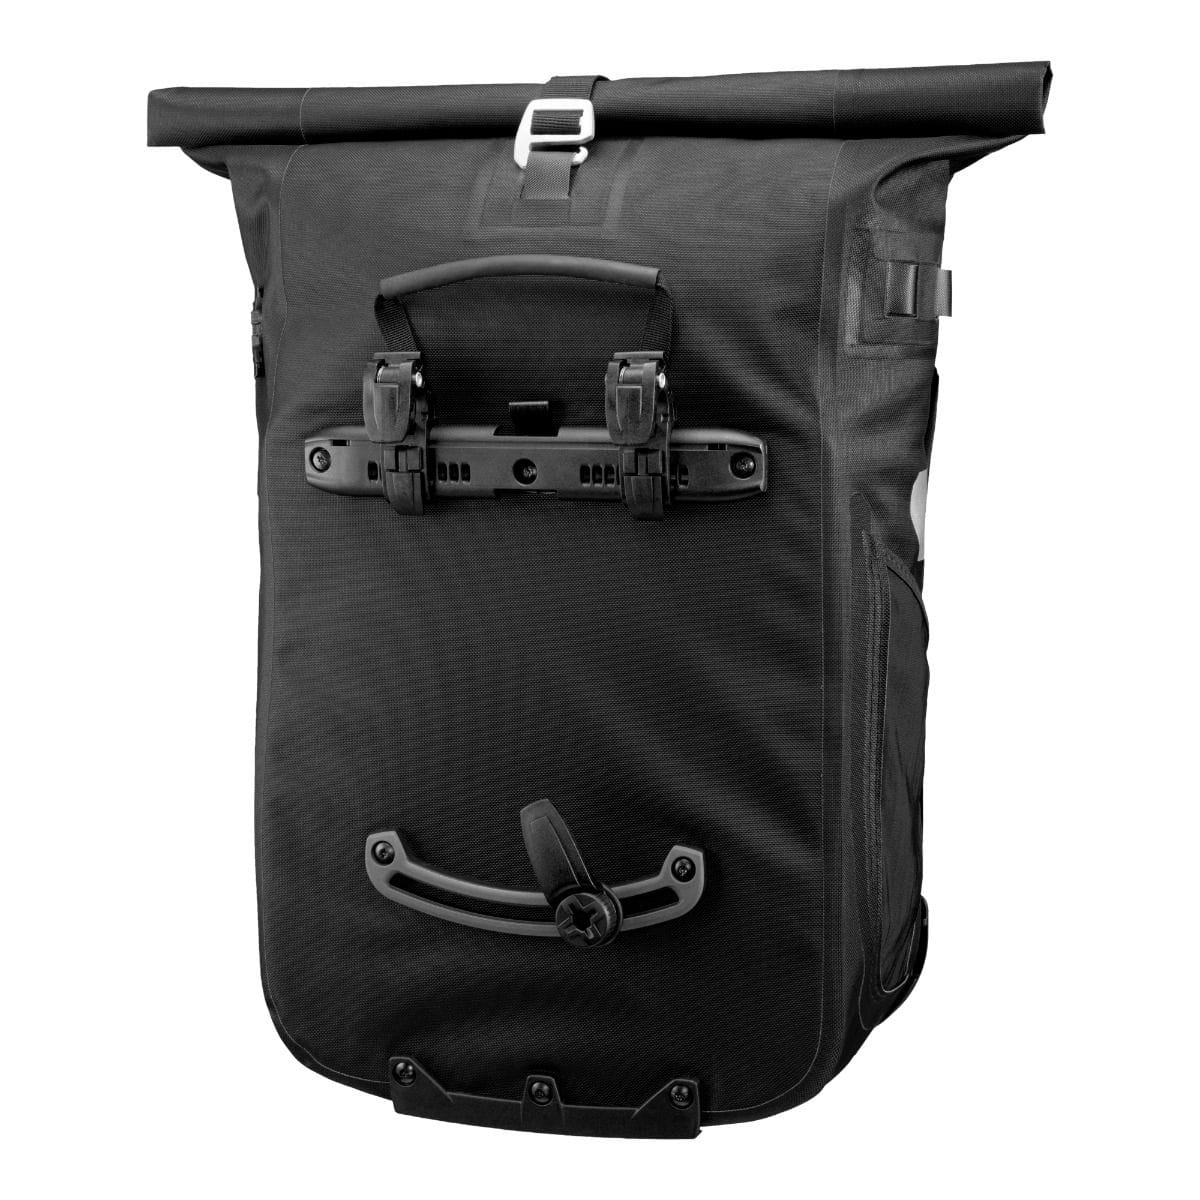 Ortlieb Vario PS High Vis QL2.1 Backpack & Rear Pannier Bag 26L